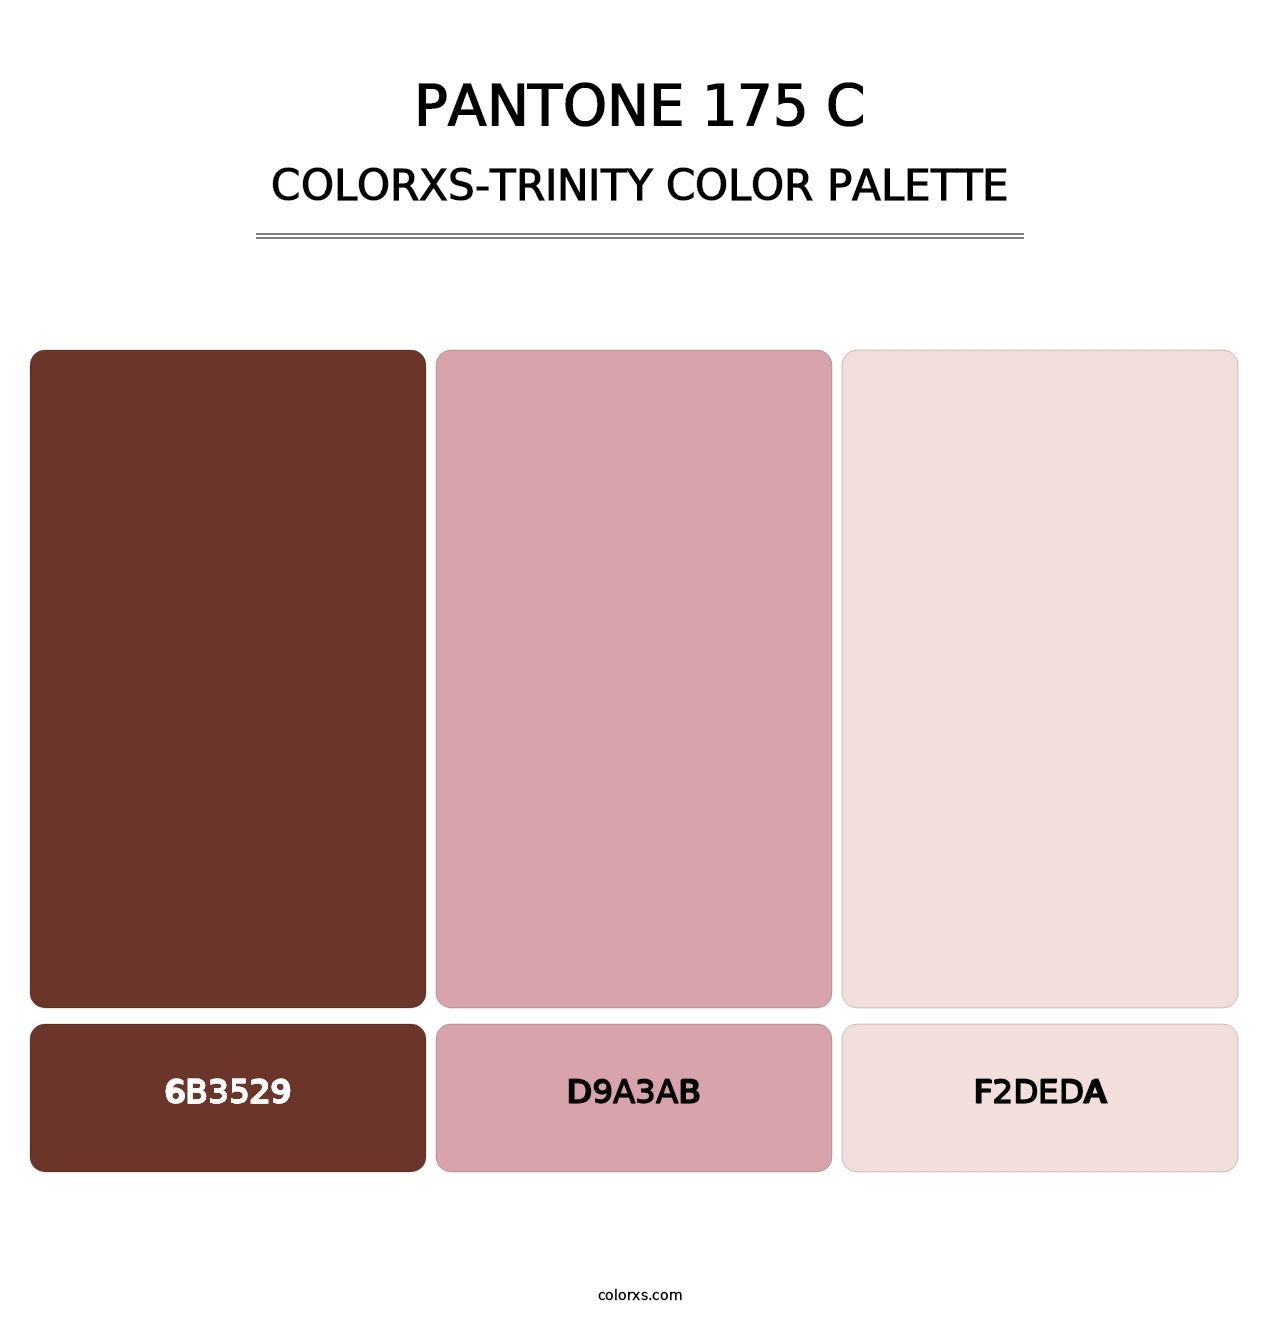 PANTONE 175 C - Colorxs Trinity Palette